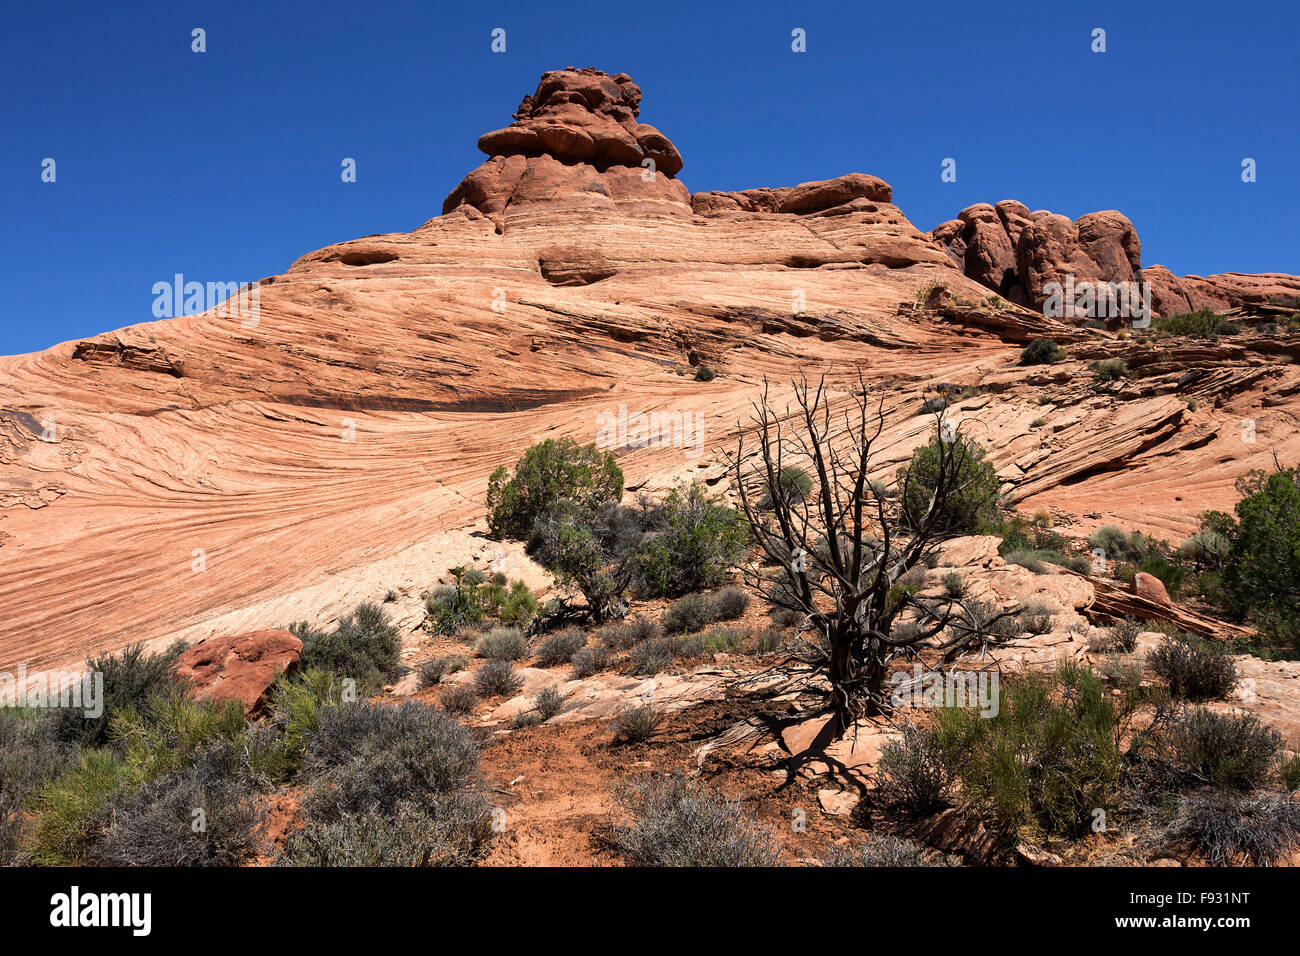 Rock formation, textures, Garden of Eden, Arches National Park, Utah, USA Stock Photo